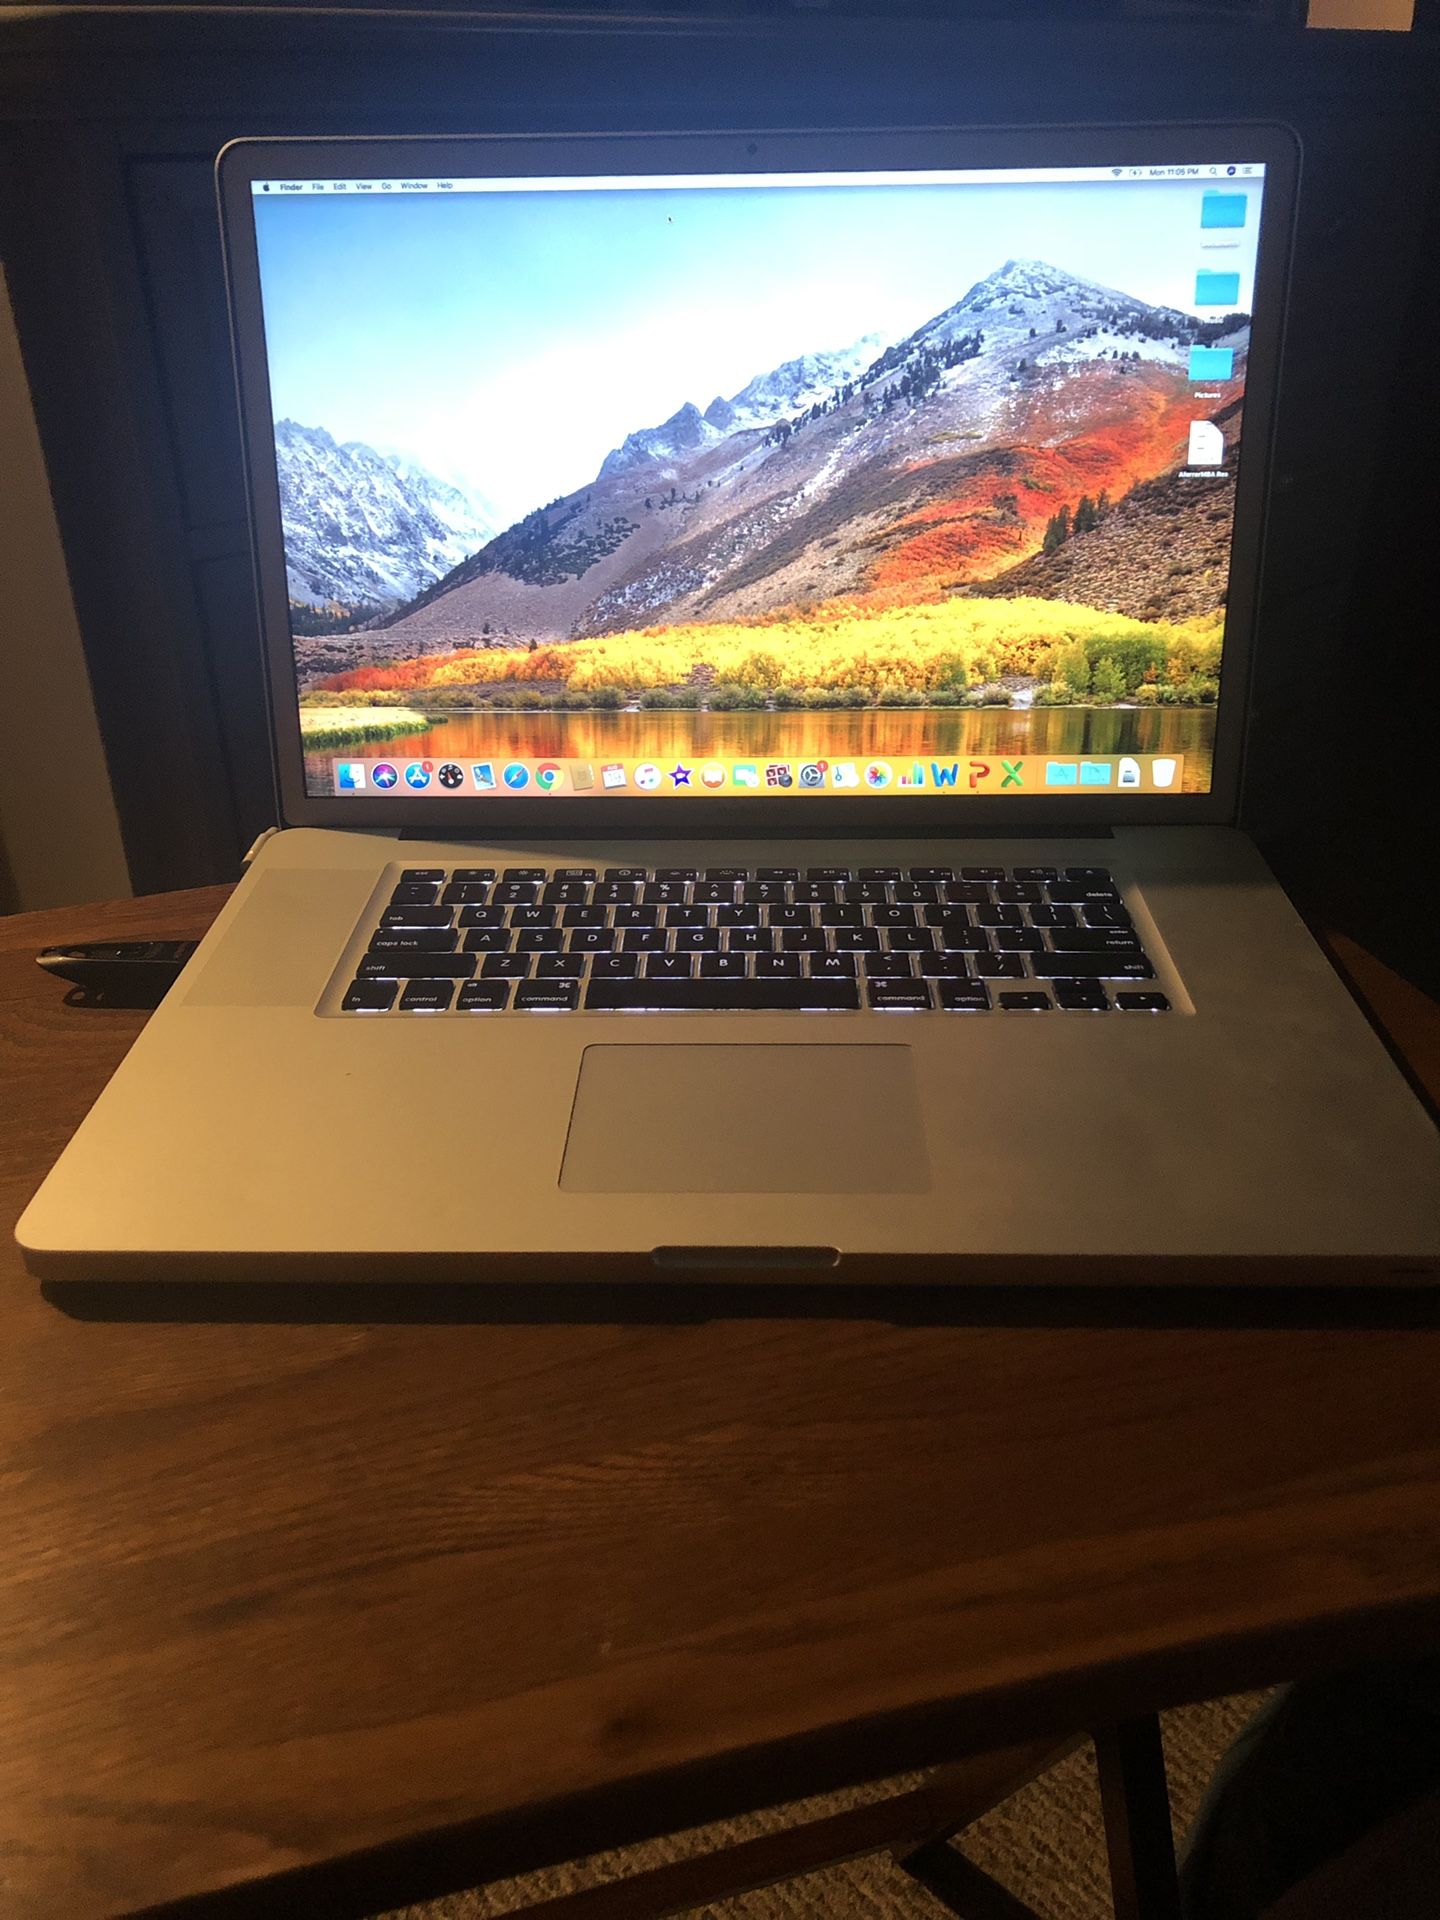 MacBook Pro - like new - 17” anti-glare screen with upgraded 1TB HD